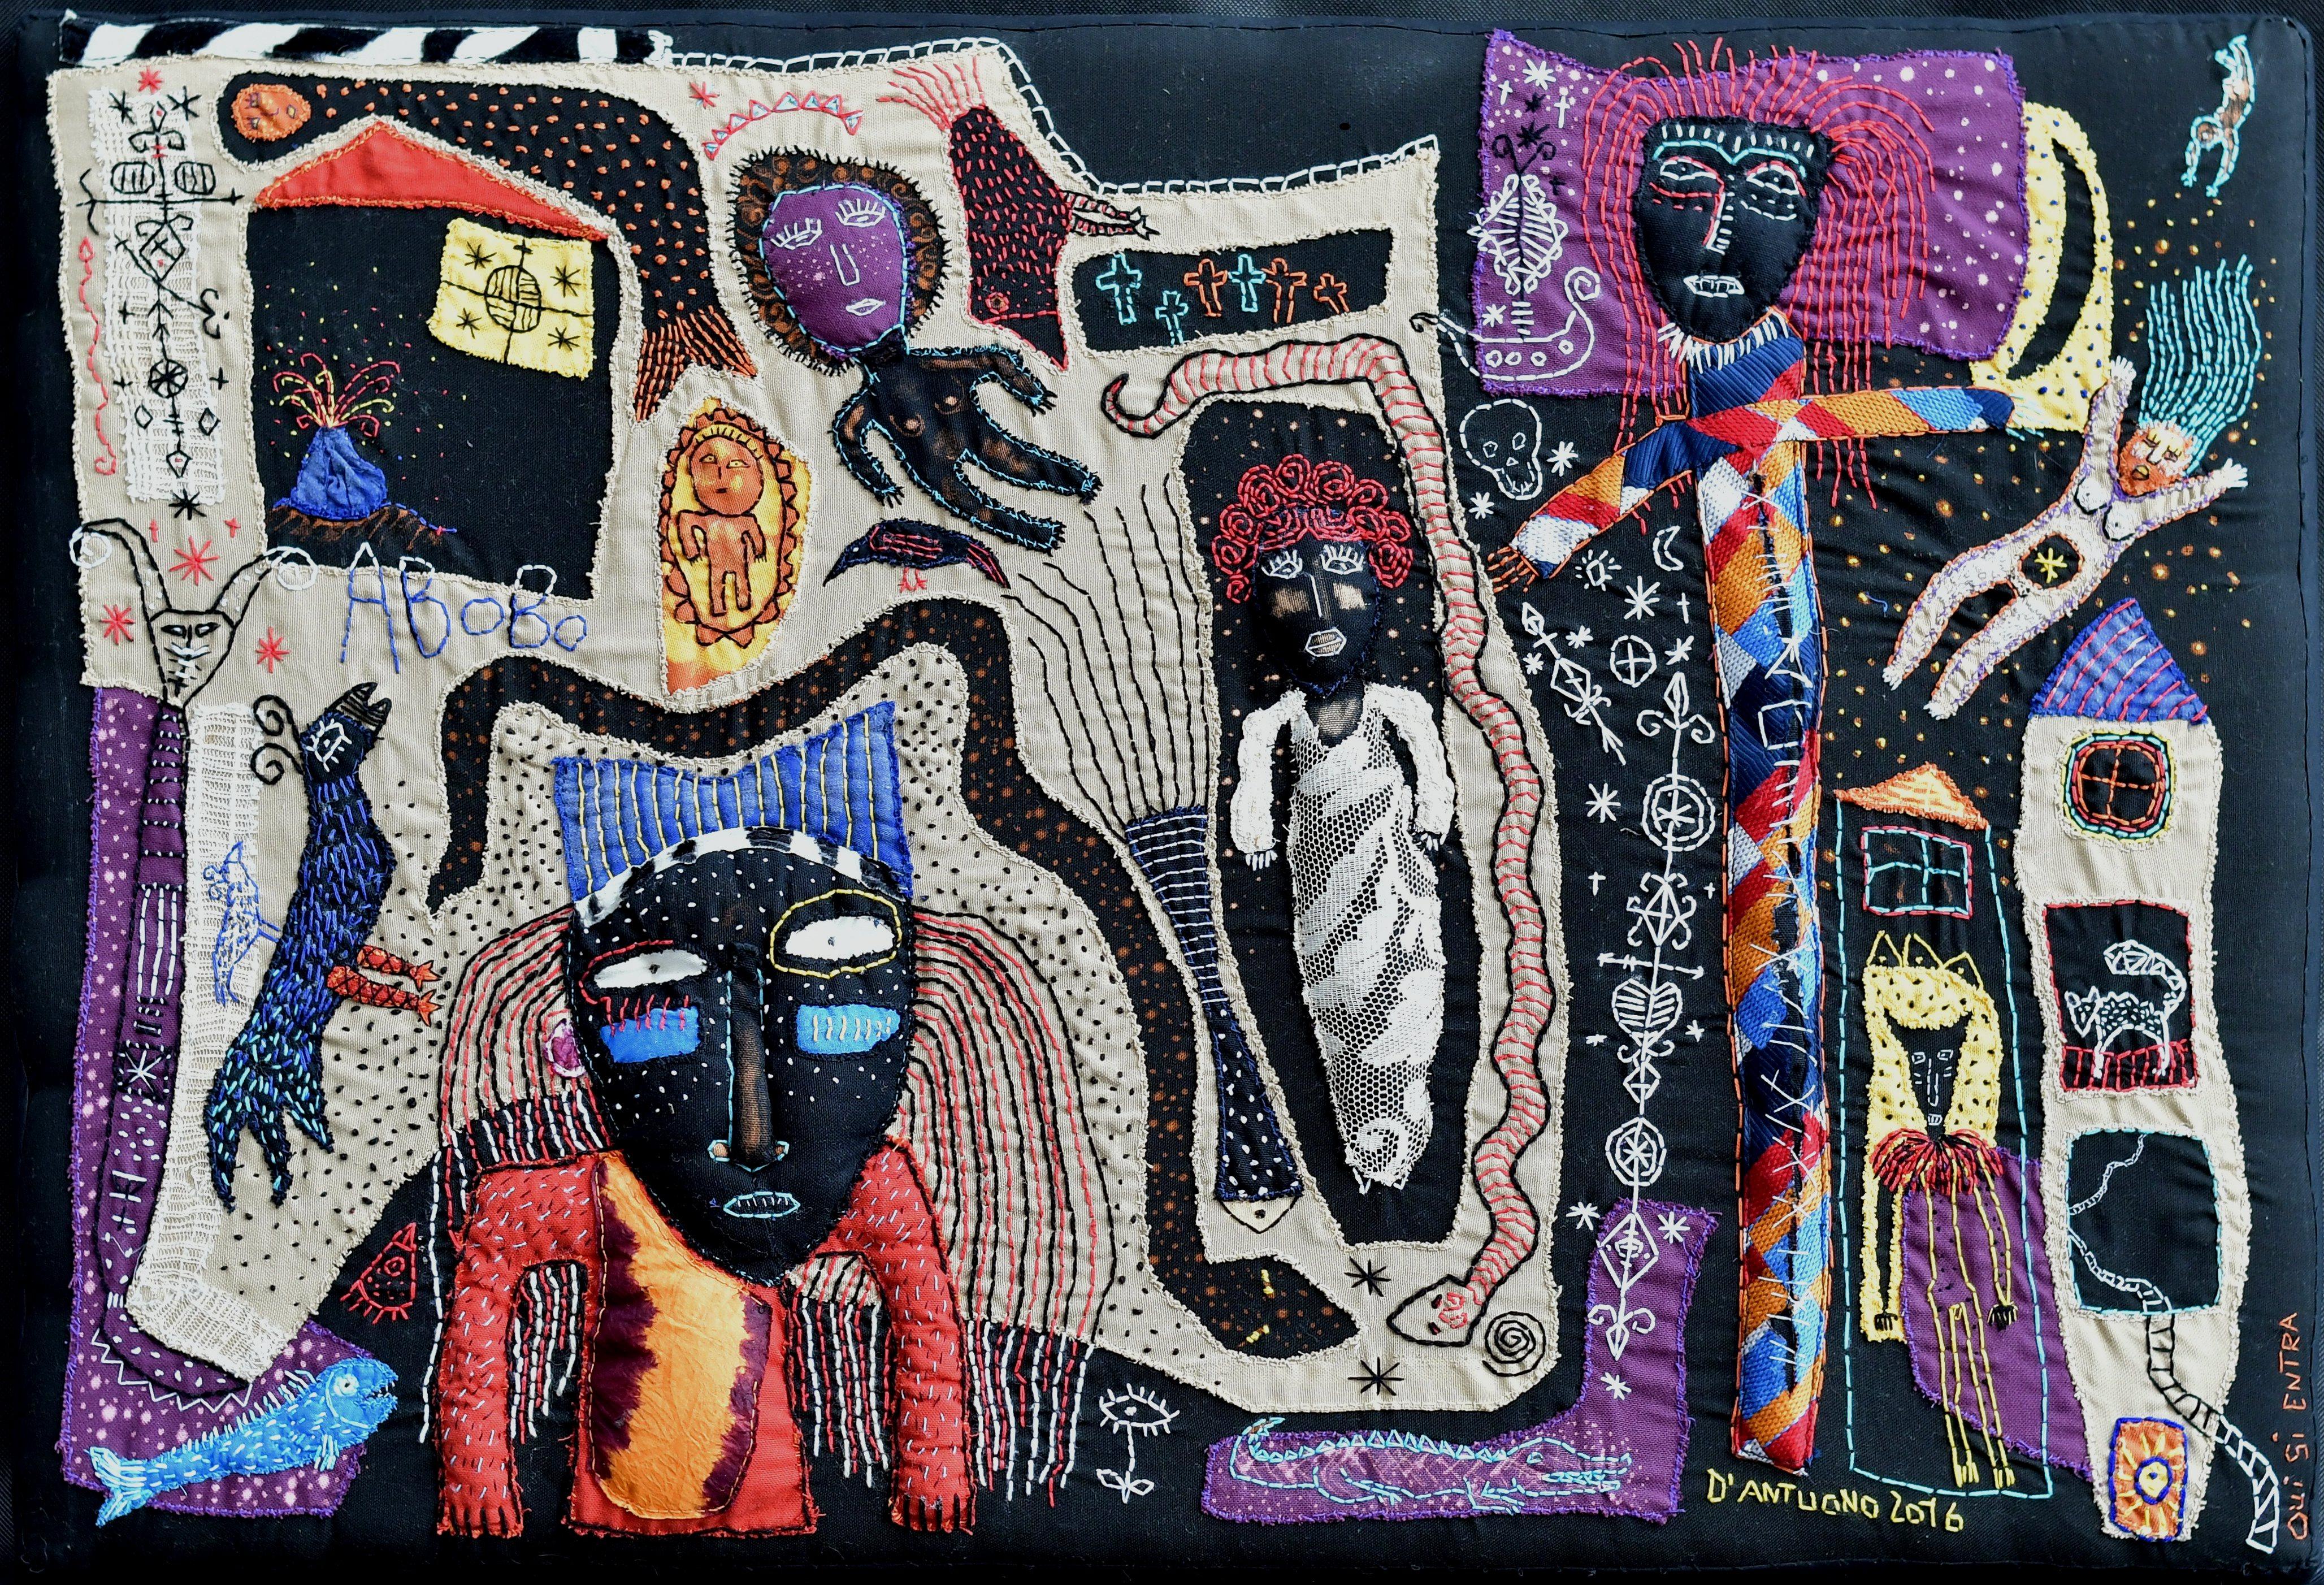 Abobo - Barbara d'Antuono, 21st Century Contempory textile art hand sewn